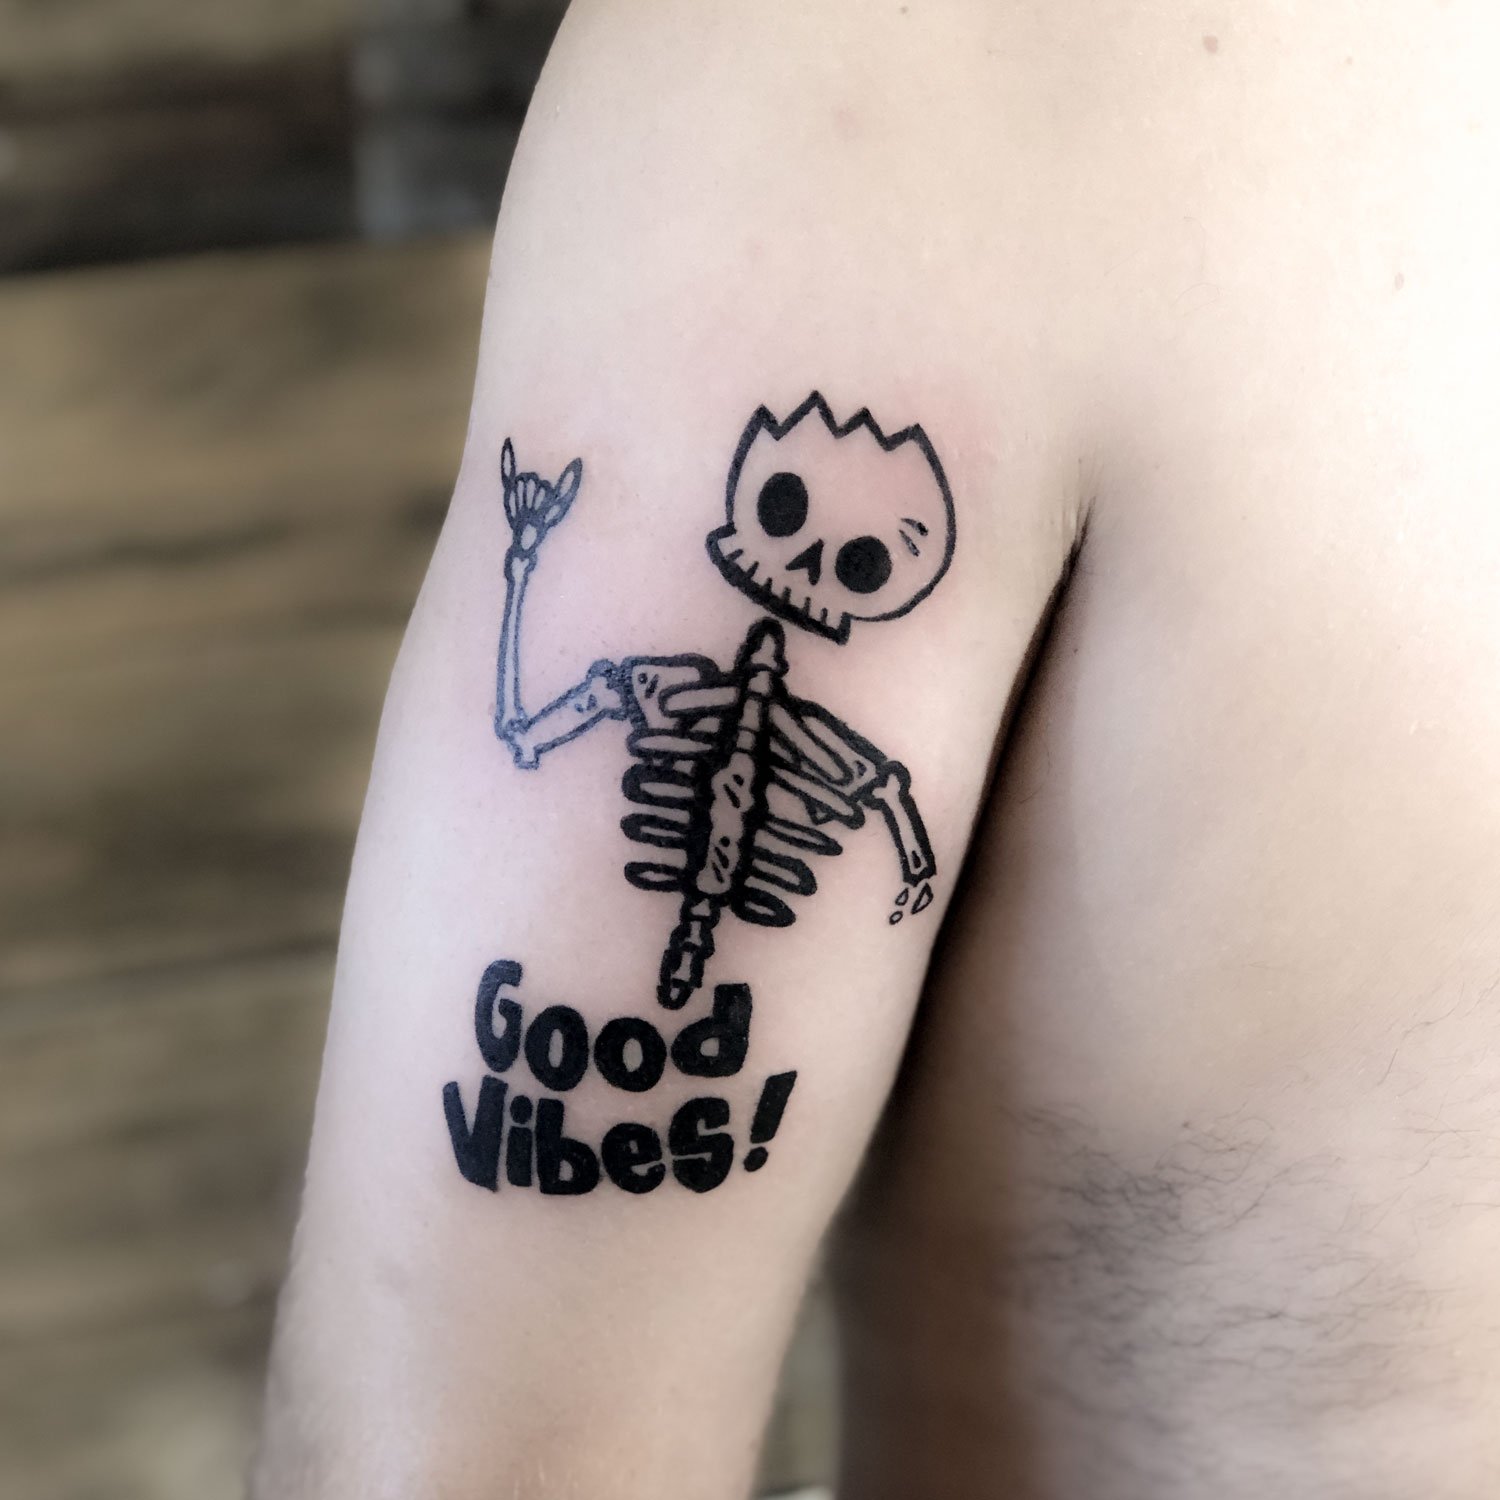 Tatuaje black work del esqueleto de un surfer